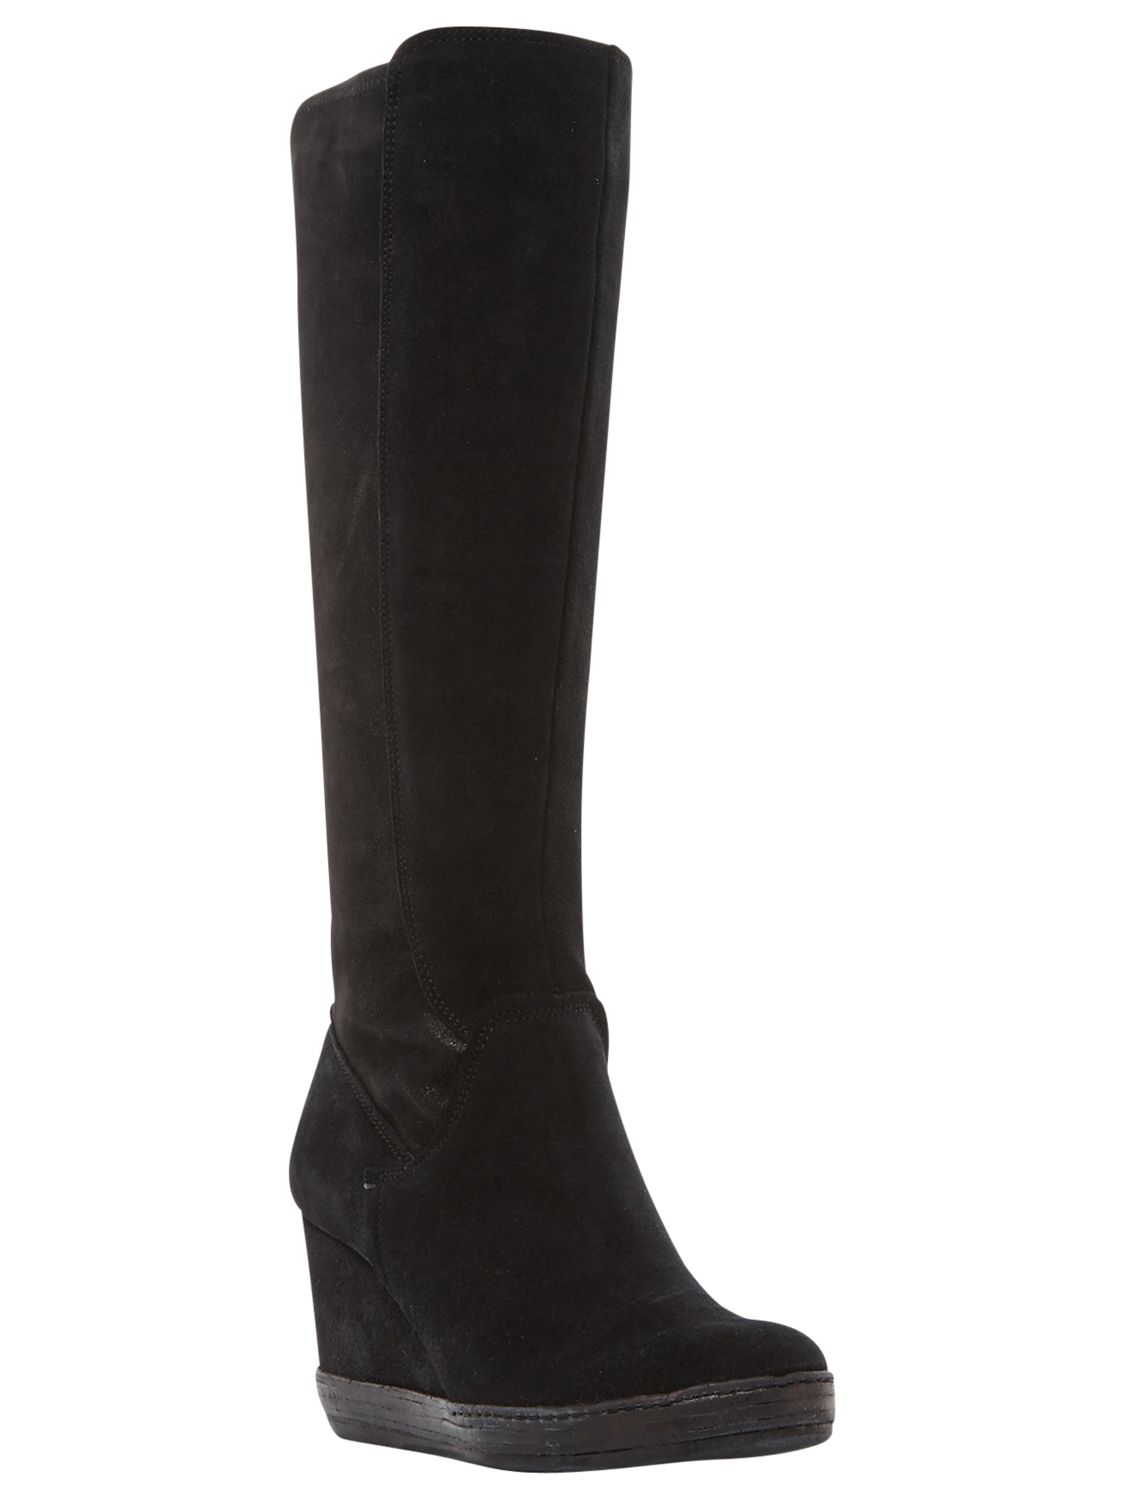 Dune Vera Wedge Heeled Knee High Boots, Black, 4